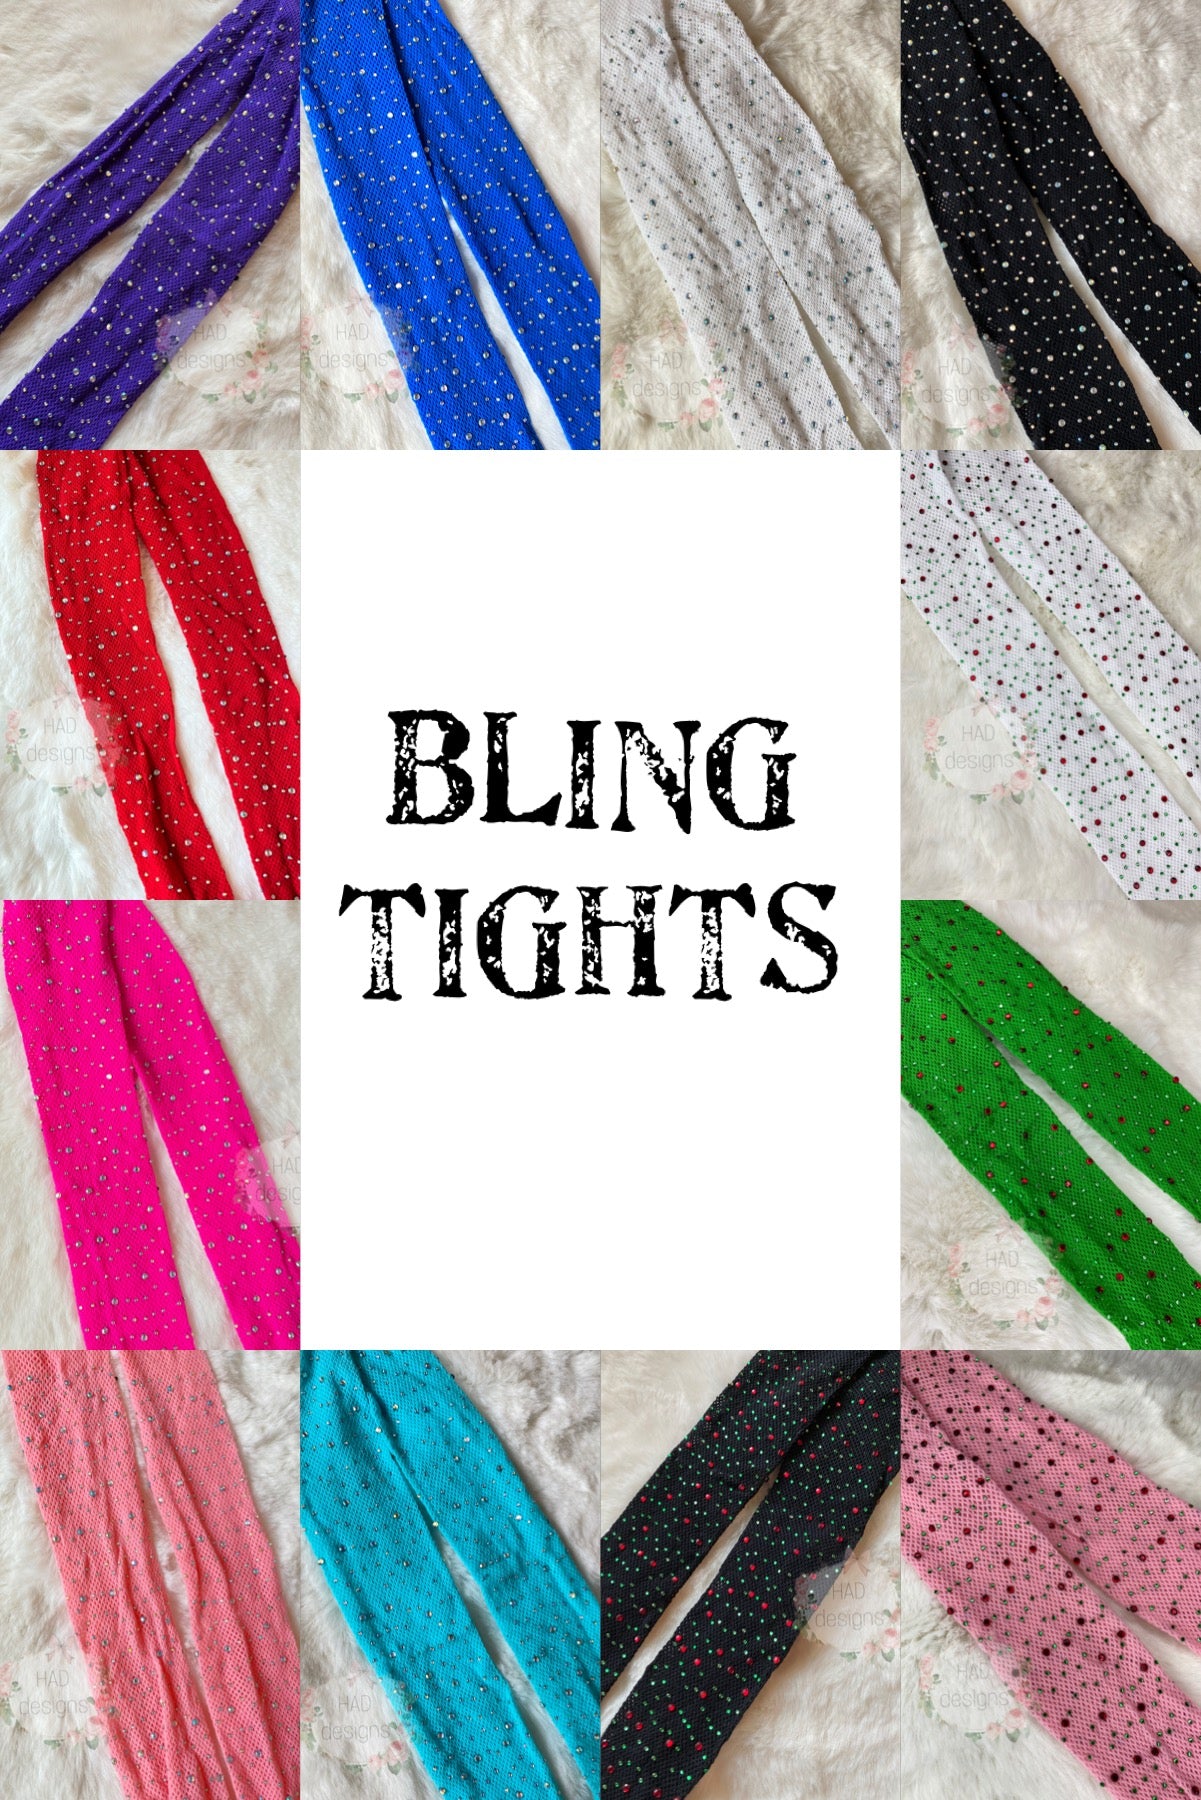 Bling tights